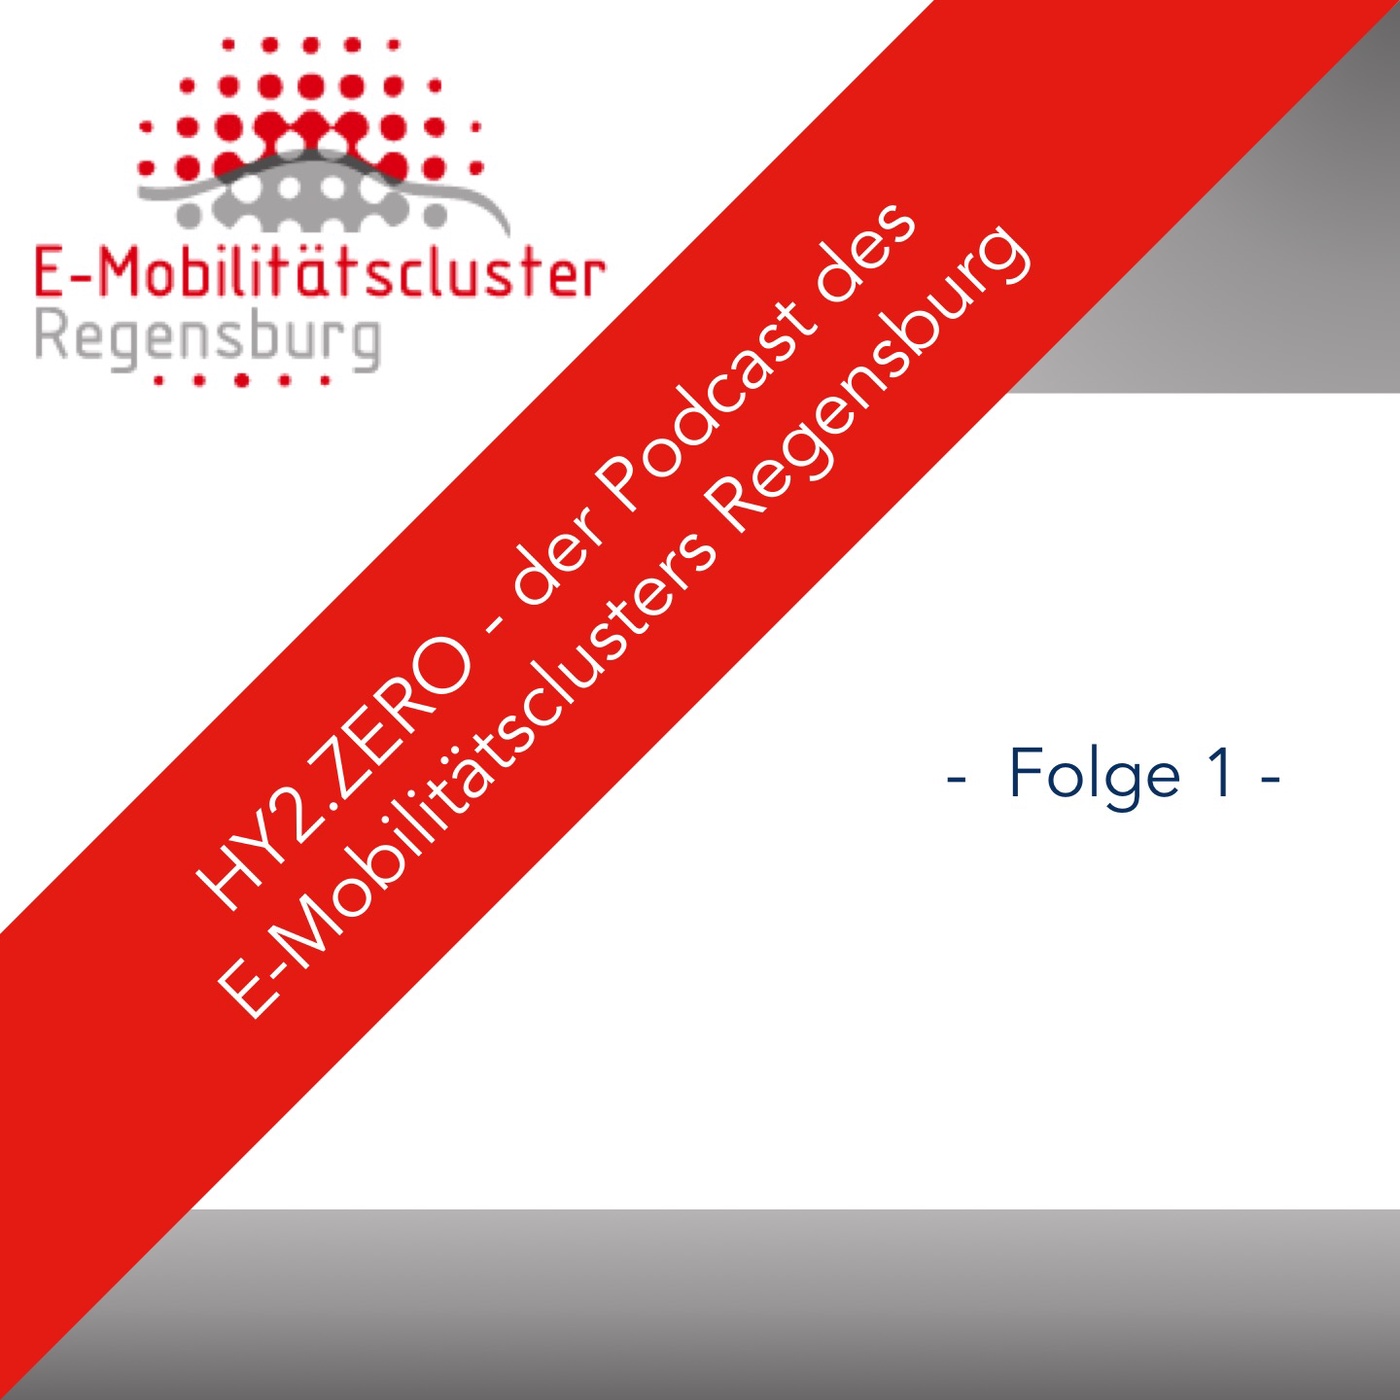 HY2.ZERO - Das E-Mobilitätscluster Regensburg